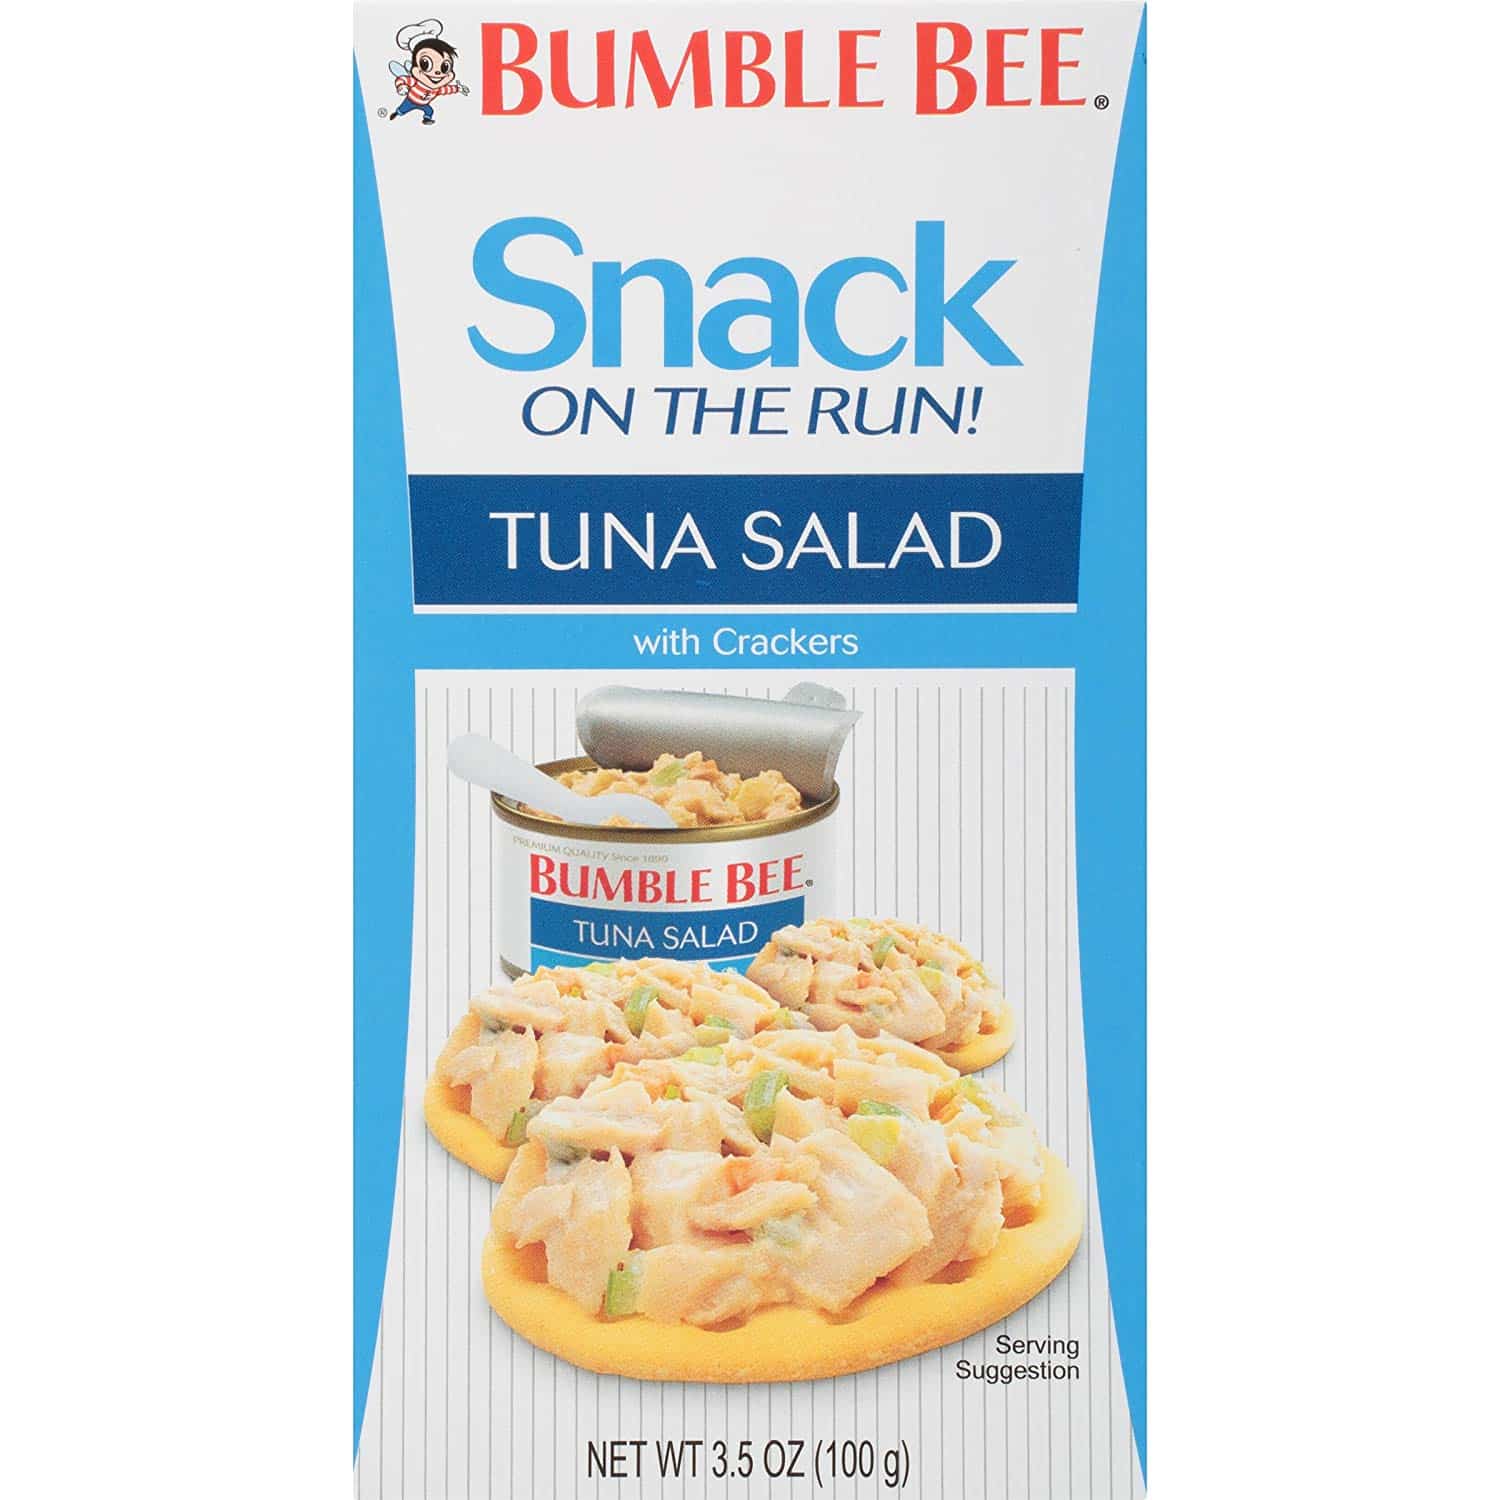 BUMBLE BEE Snack on the Run Tuna Salad with Crackers, Canned Tuna Fish ...